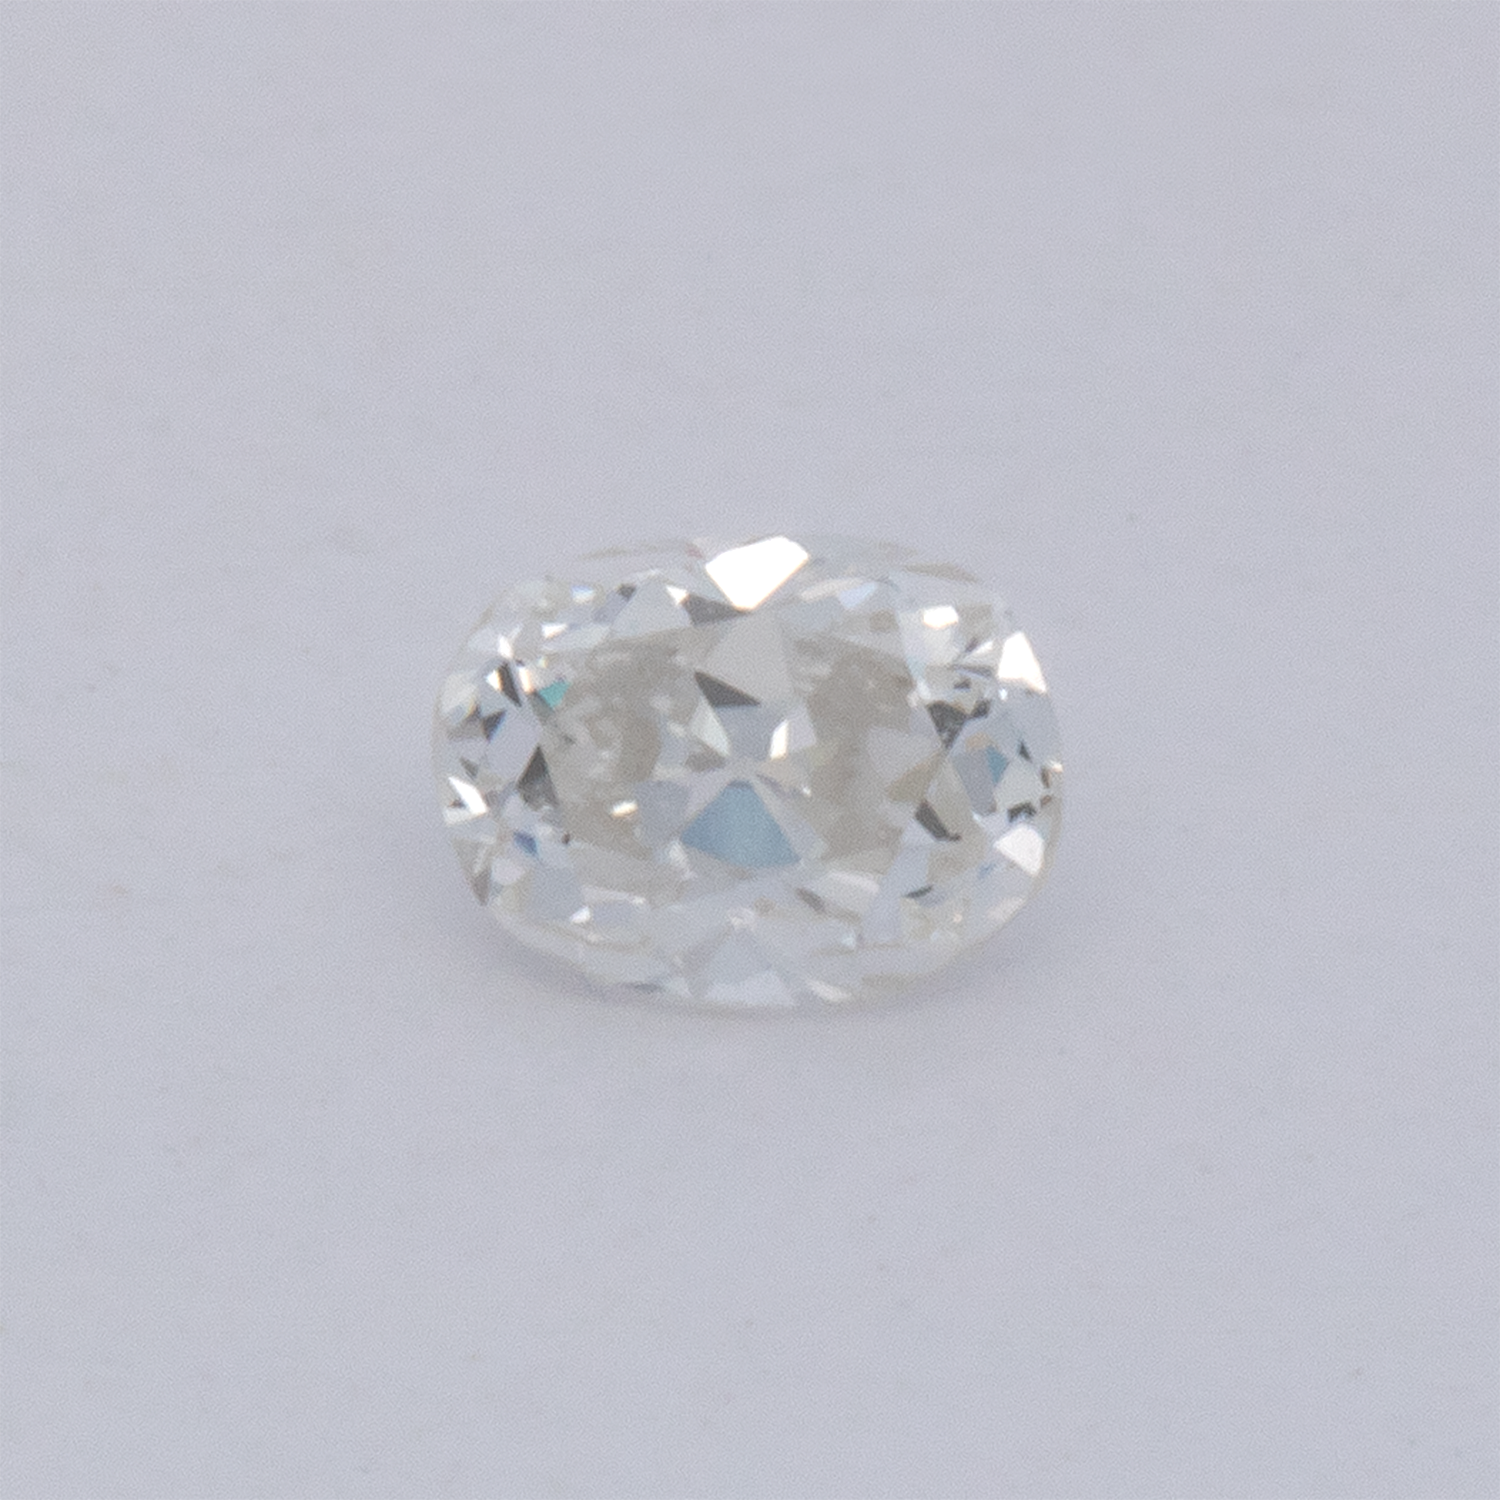 Diamant - fein weiß, oval, 3.2x2.4 mm, 0.09 cts, Nr. DT1018